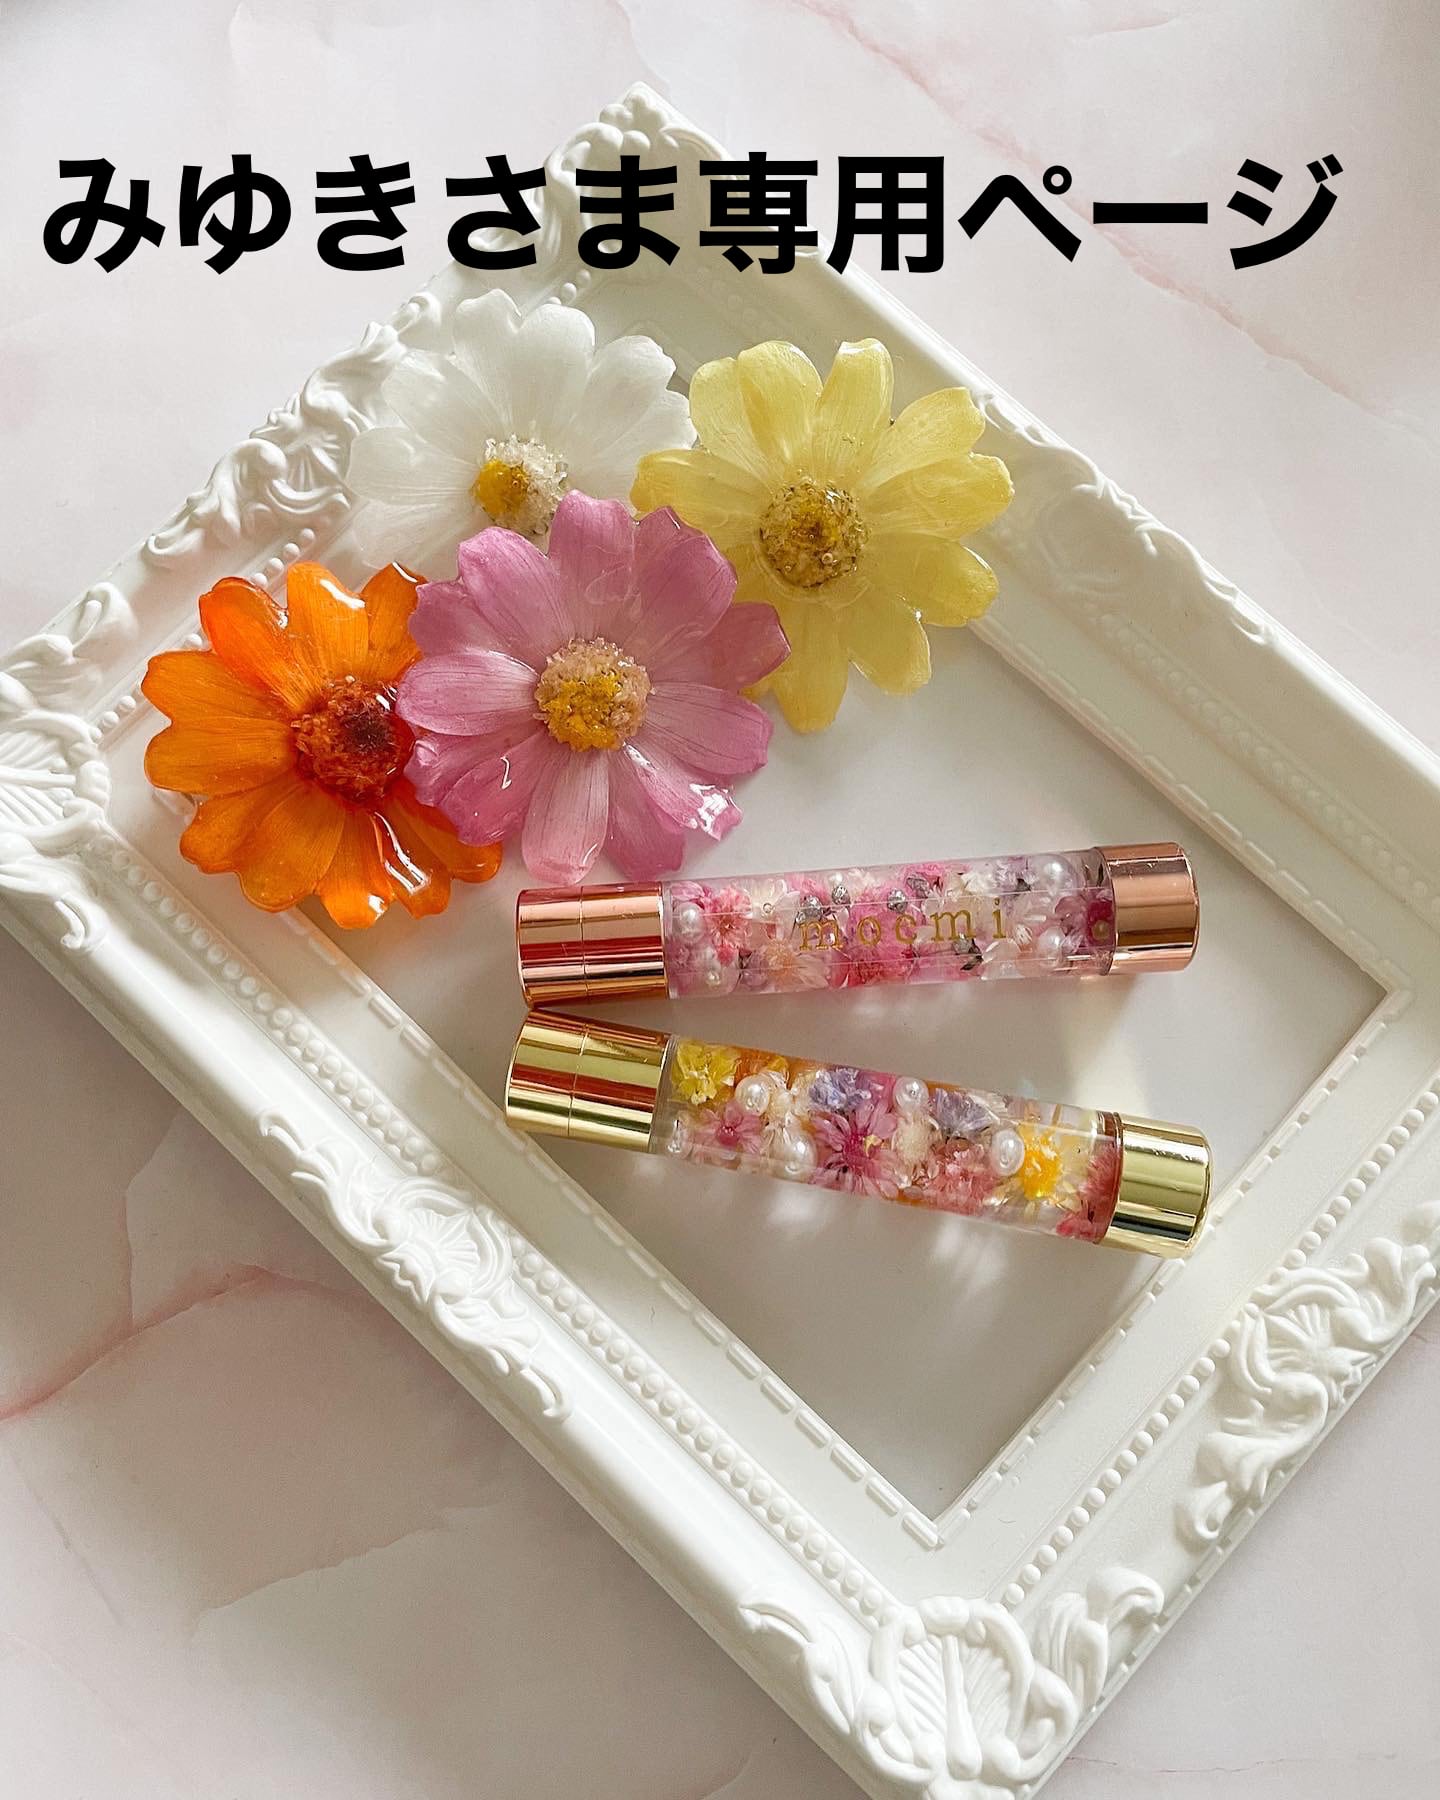 MIYUKI sama 専用ページハンドメイド - ファッション雑貨